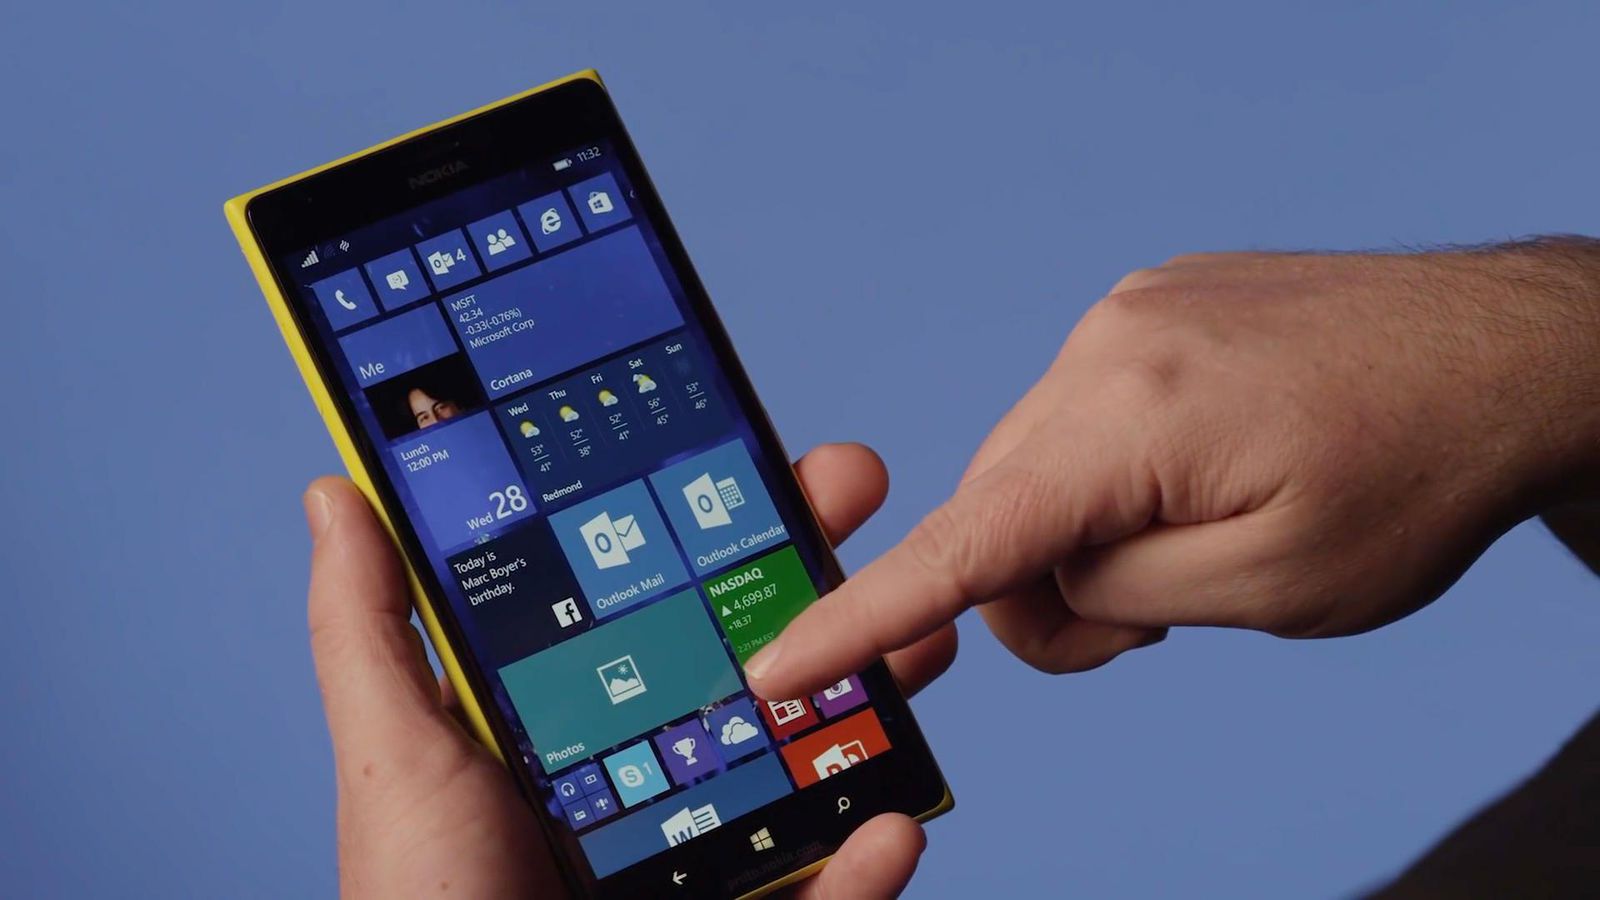 Microsoft branded smartphones coming soon?